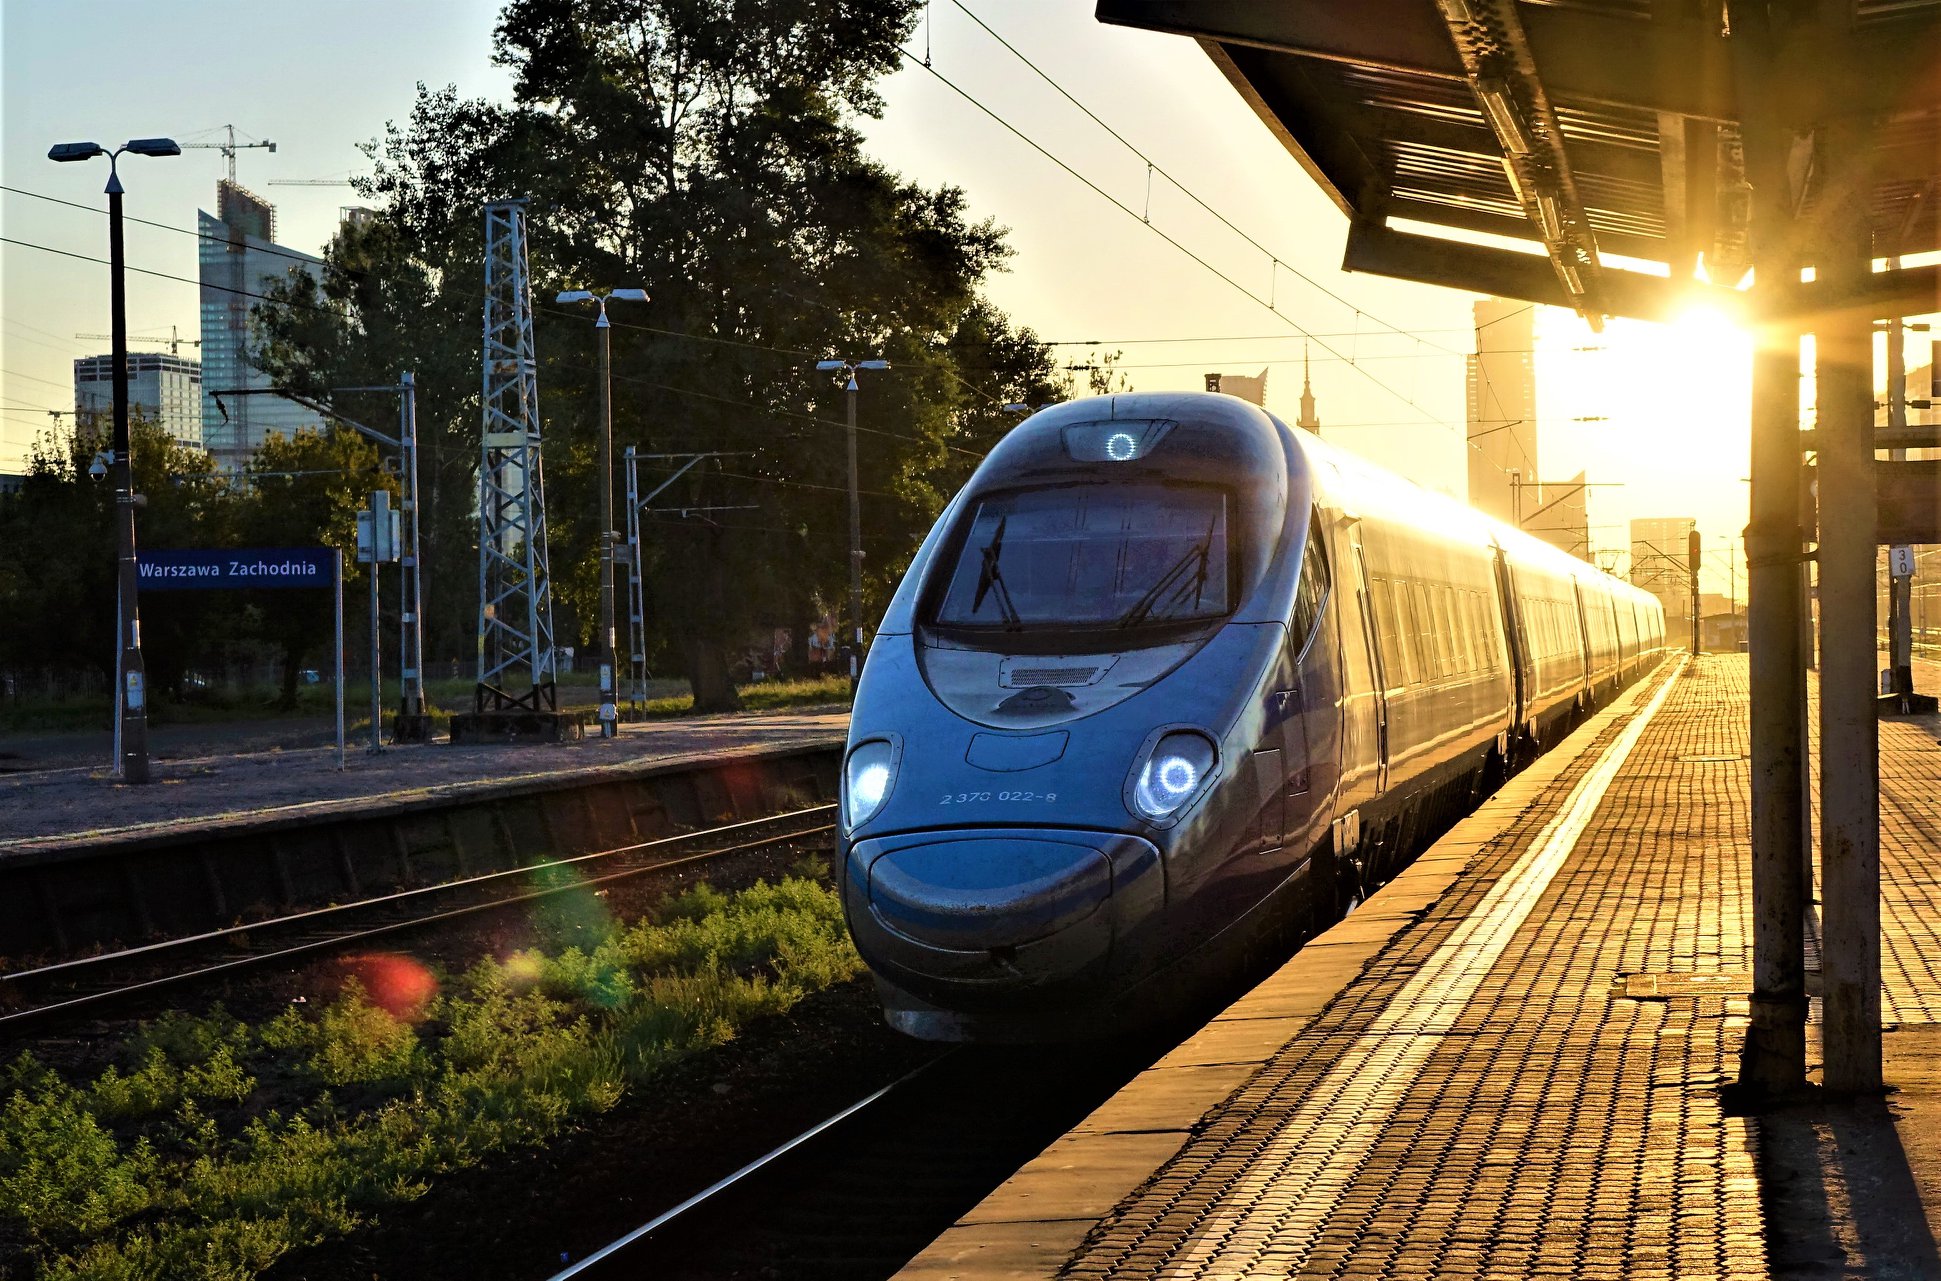 Warsaw – CPK – Łódź high-speed rail 